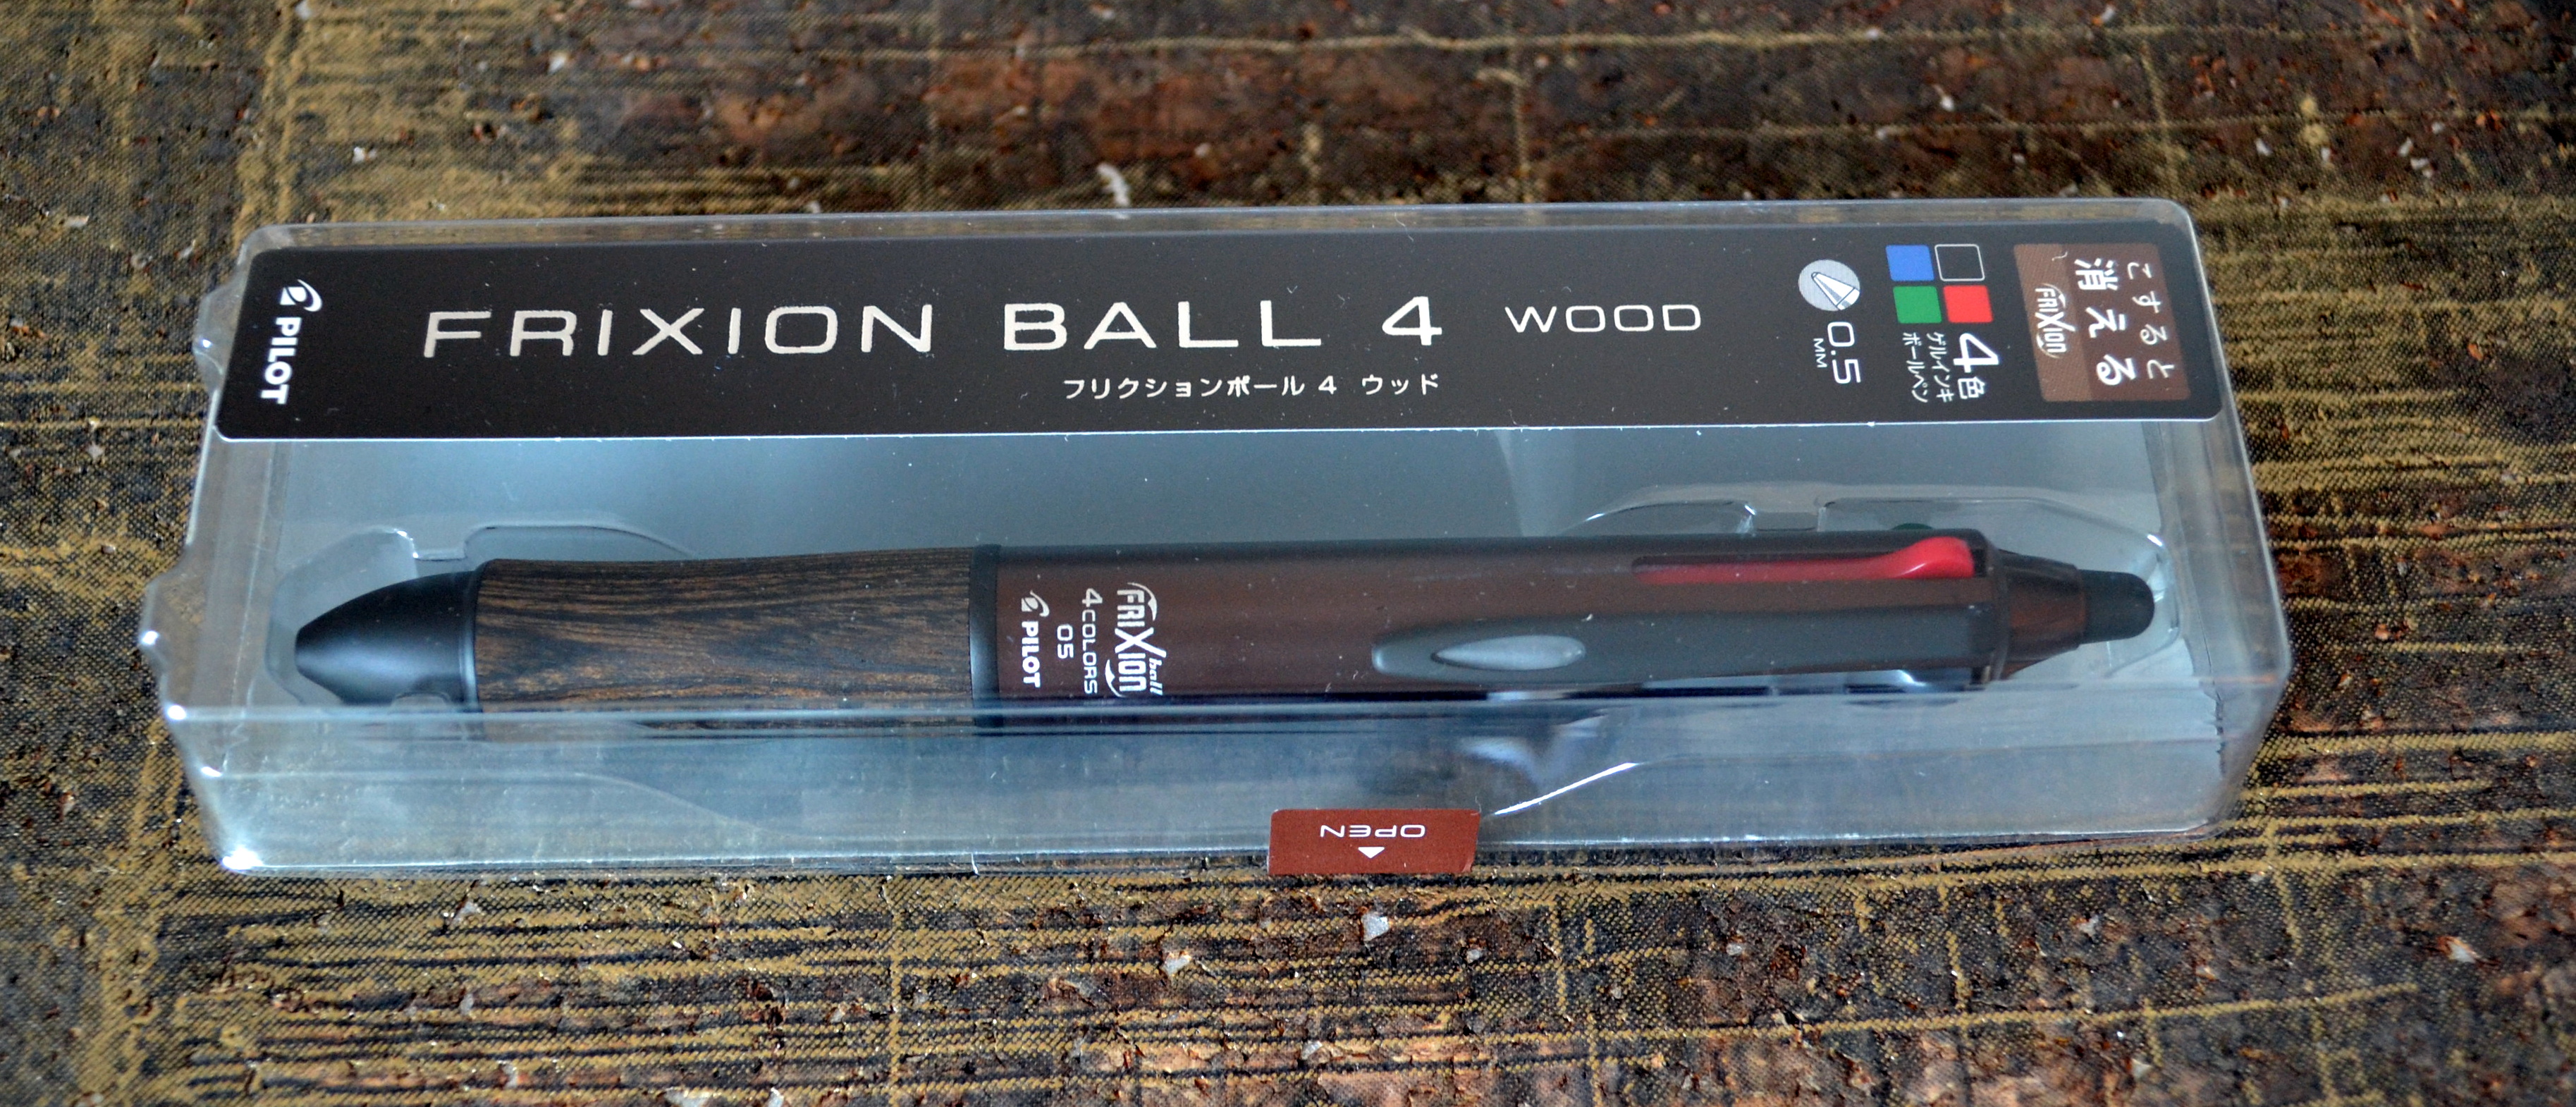 Pilot Frixion Ball 4 Wood Multi-Pen 0.5mm